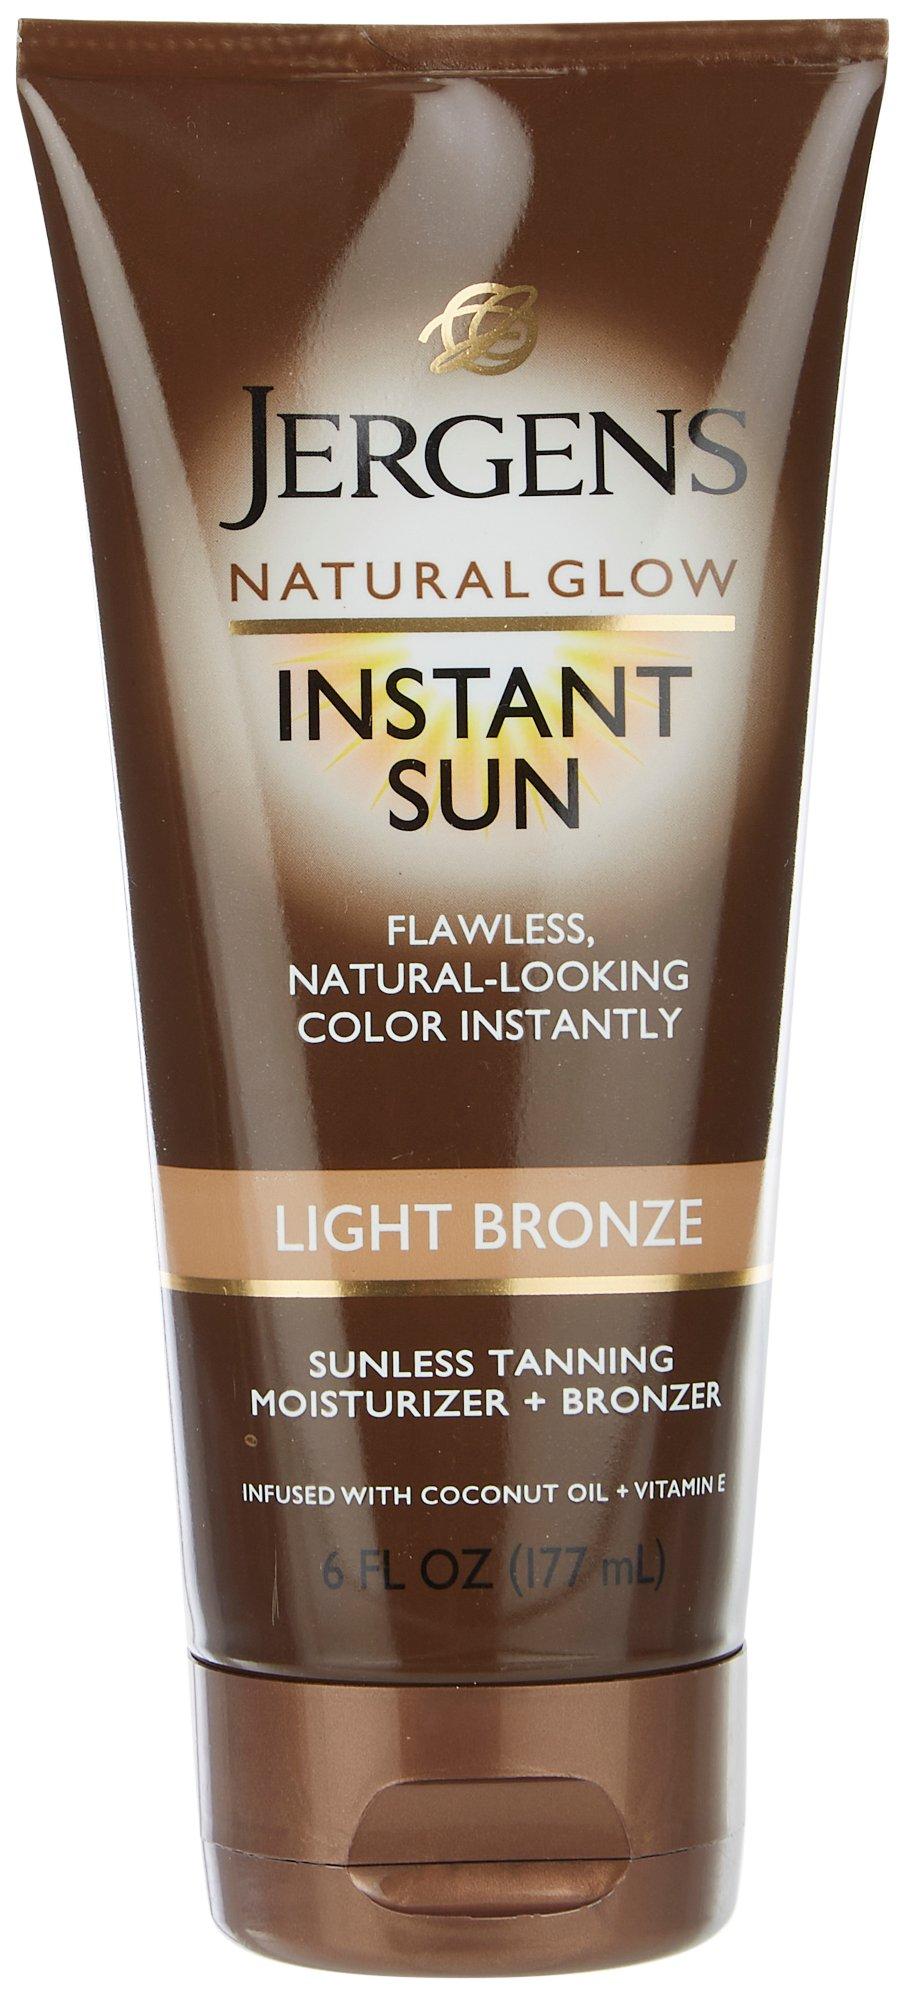 Light Bronze Sunless Tanning Moisturizer + Bronzer